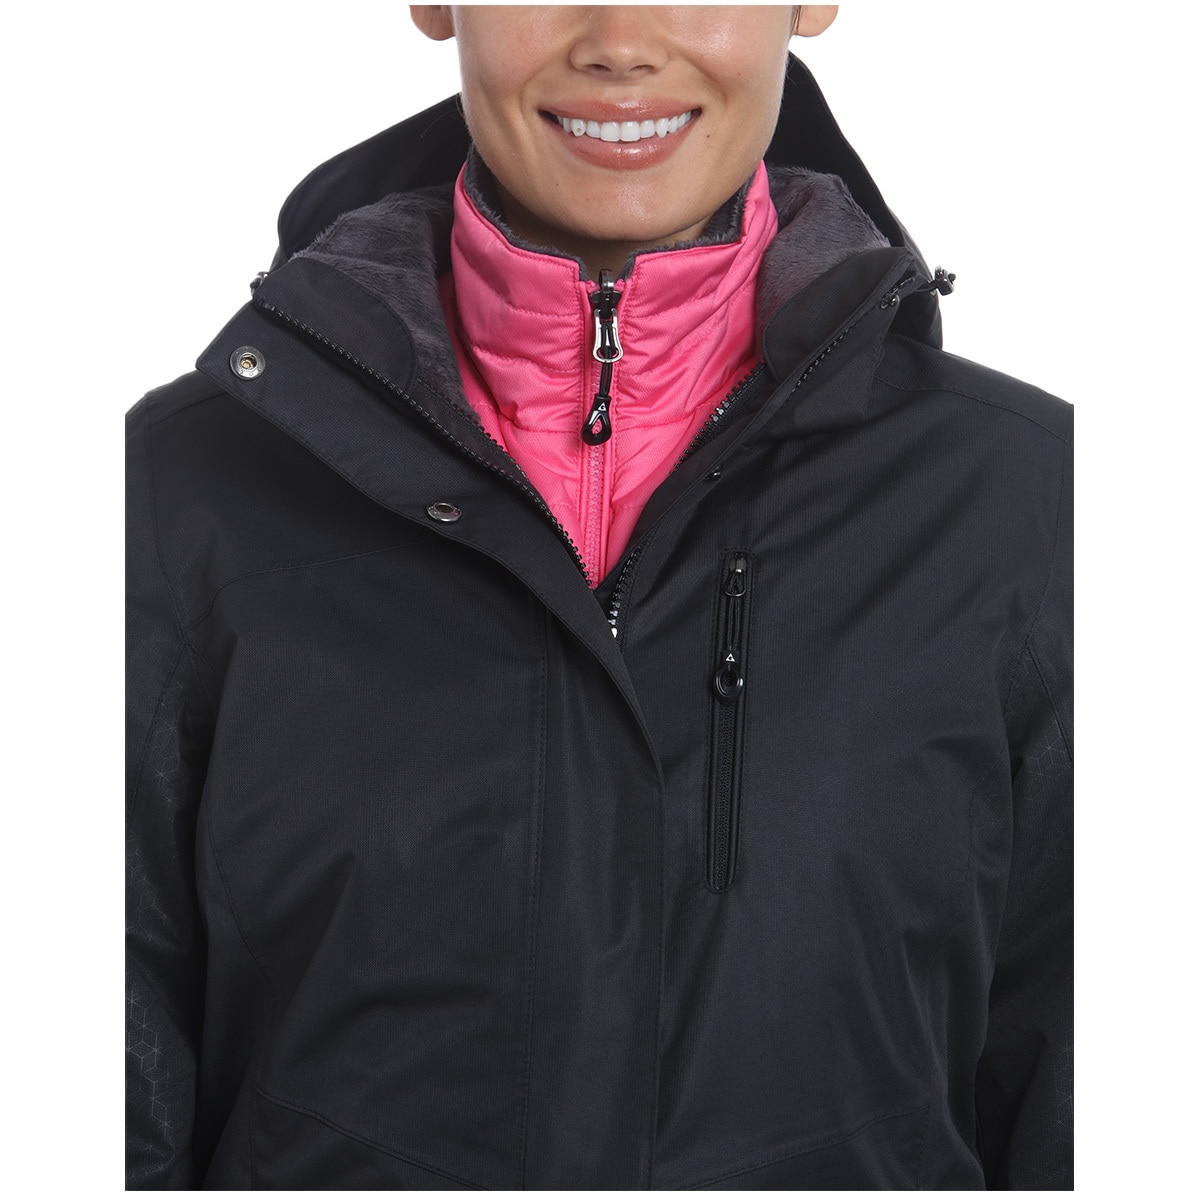 Gerry Womens Ski Jacket - Black